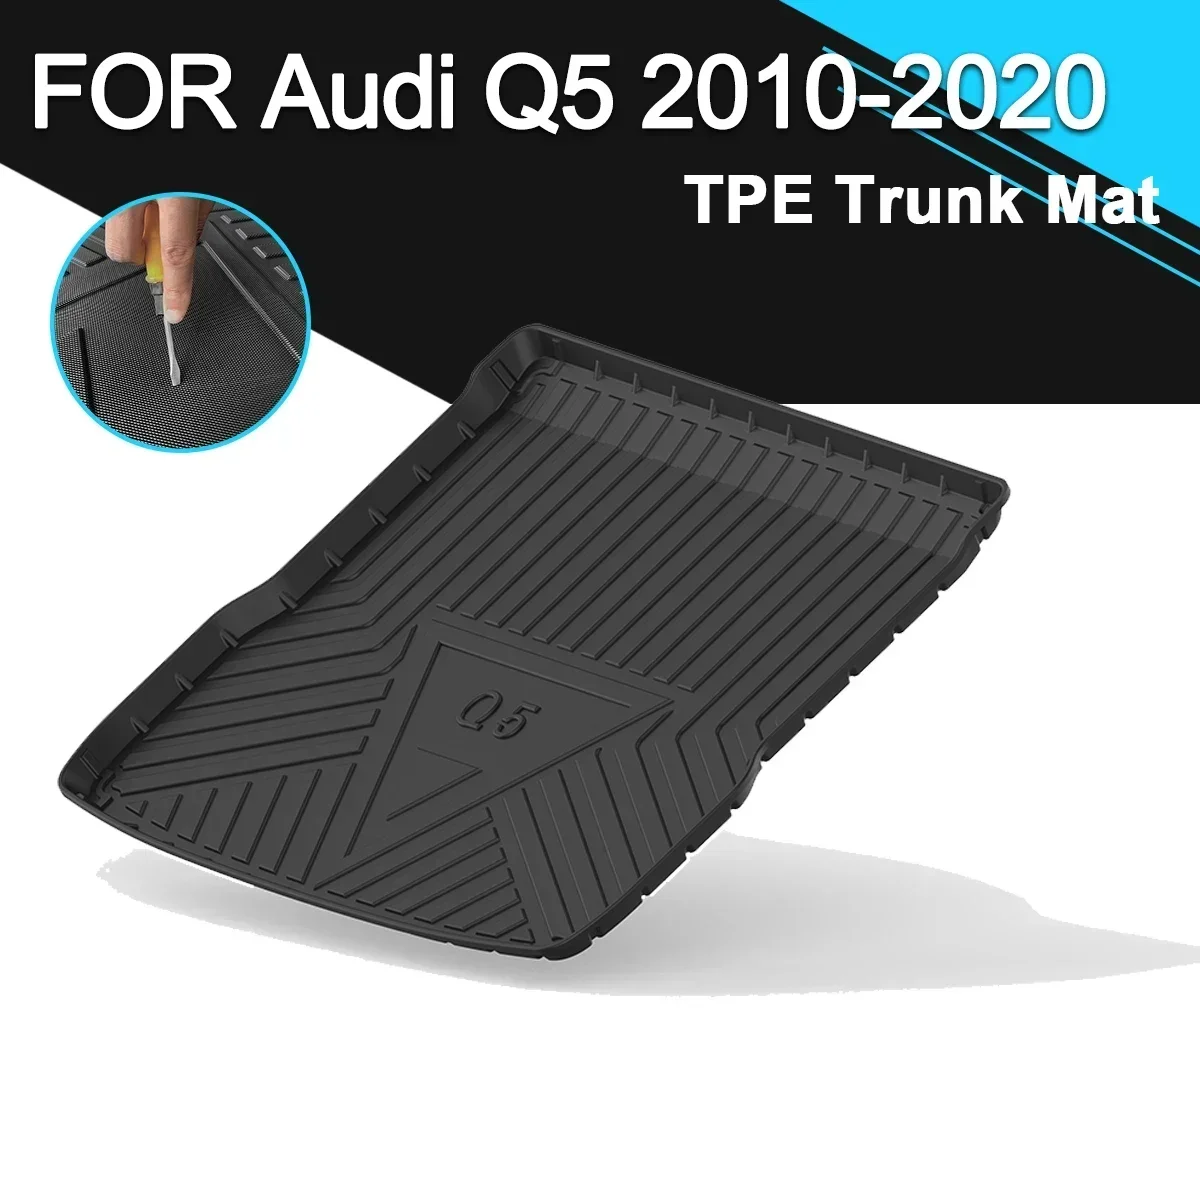 

Car Rear Trunk Cover Mat Waterproof Non-Slip TPE Rubber Cargo Liner Auto Accessories For Audi Q5 2010-2020